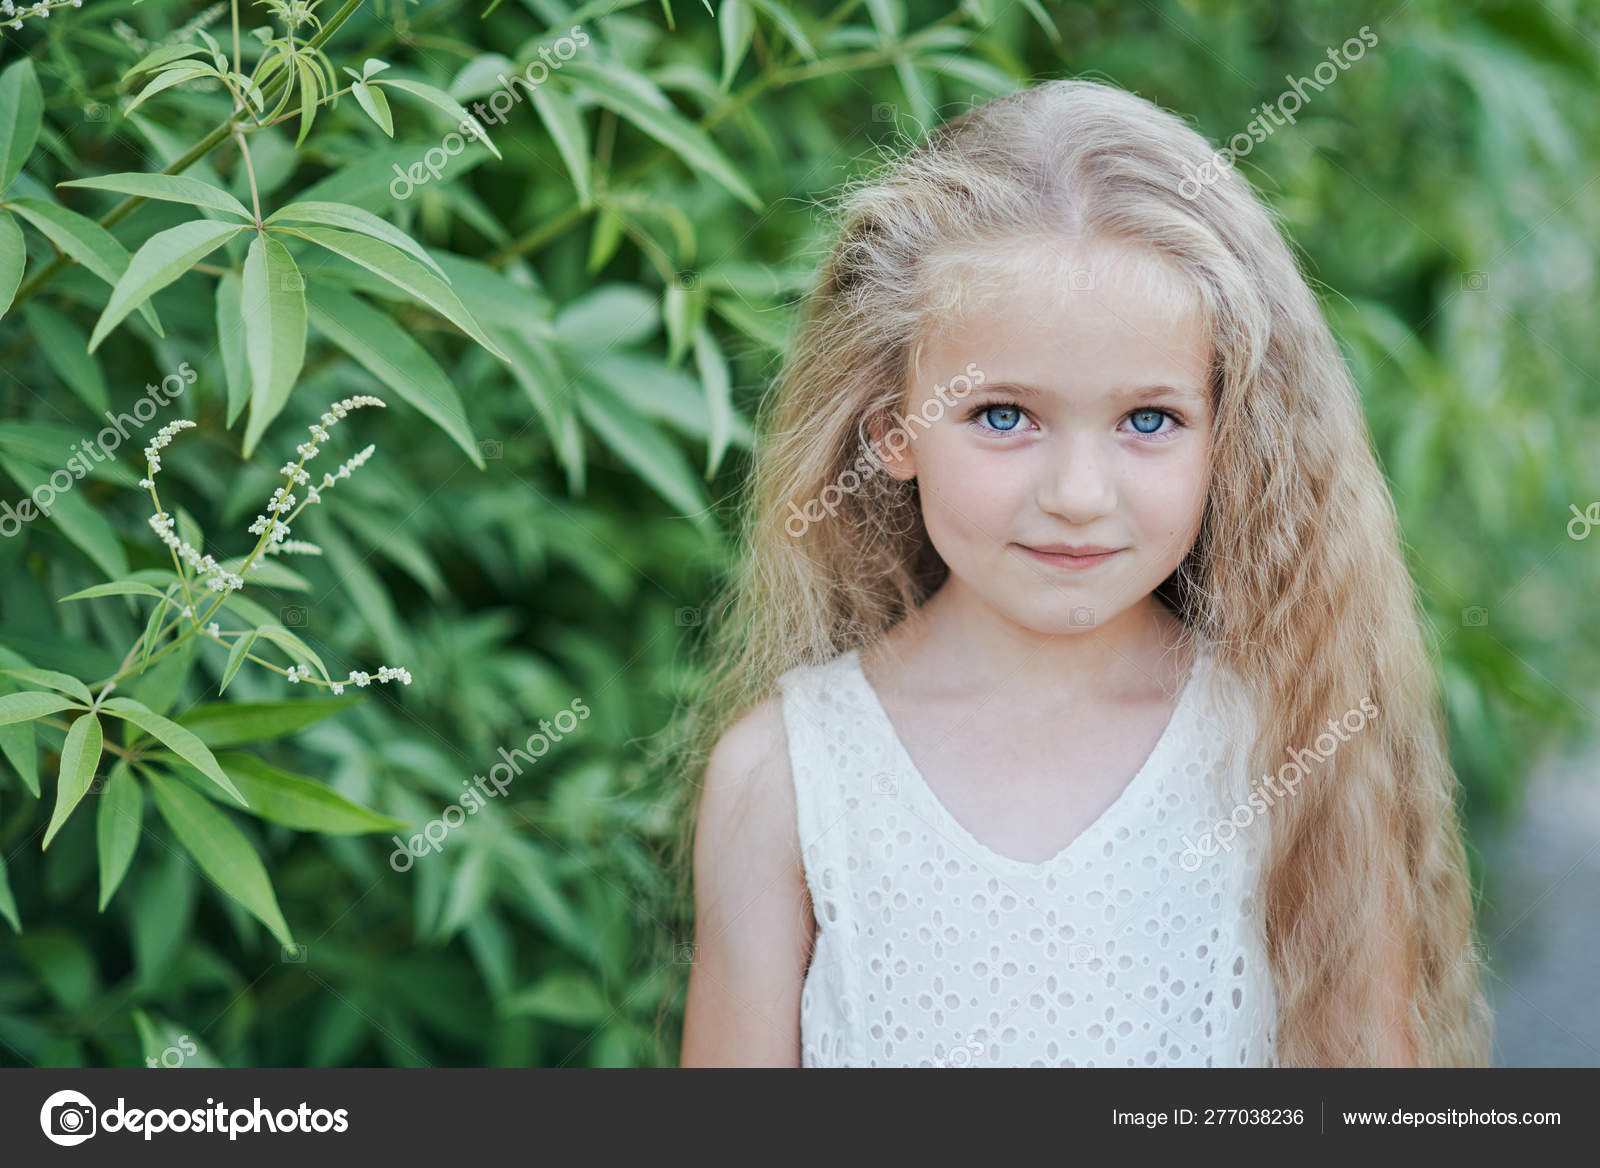 1. Cute blonde hair blue eyed baby photos - wide 1